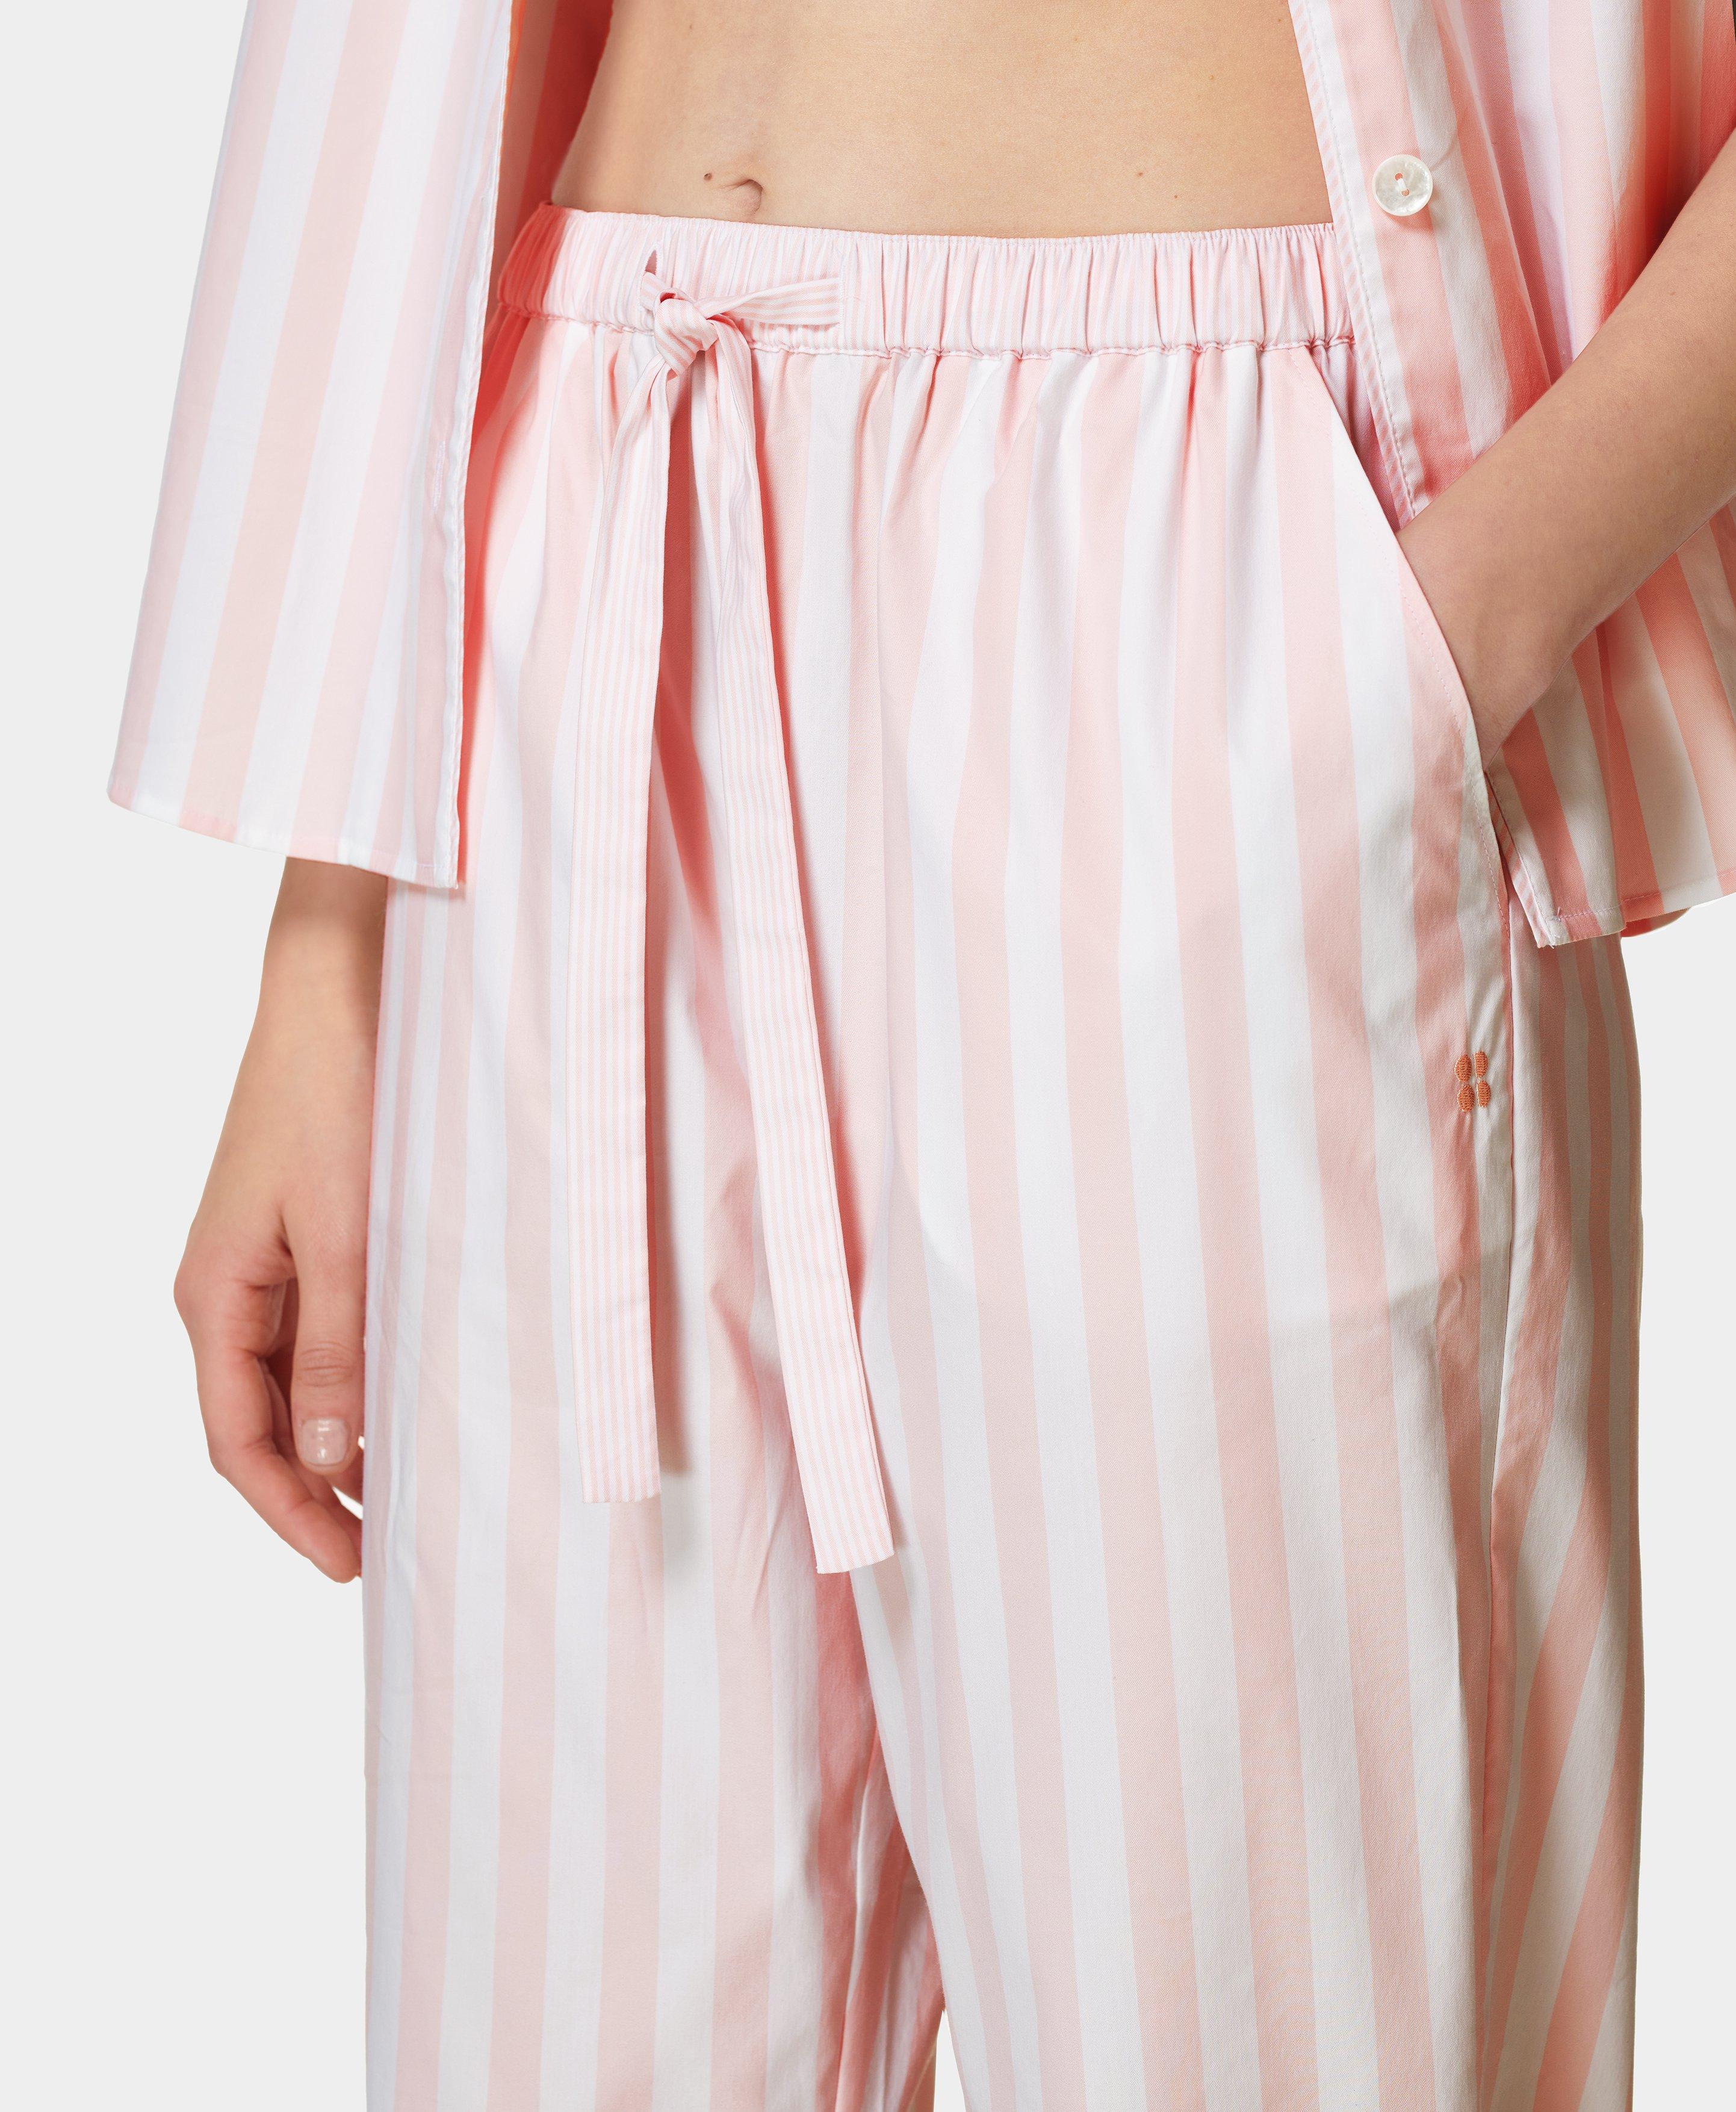 Restful Sleep Pant Powered by Brrr ° - Large Pink Stripe Print